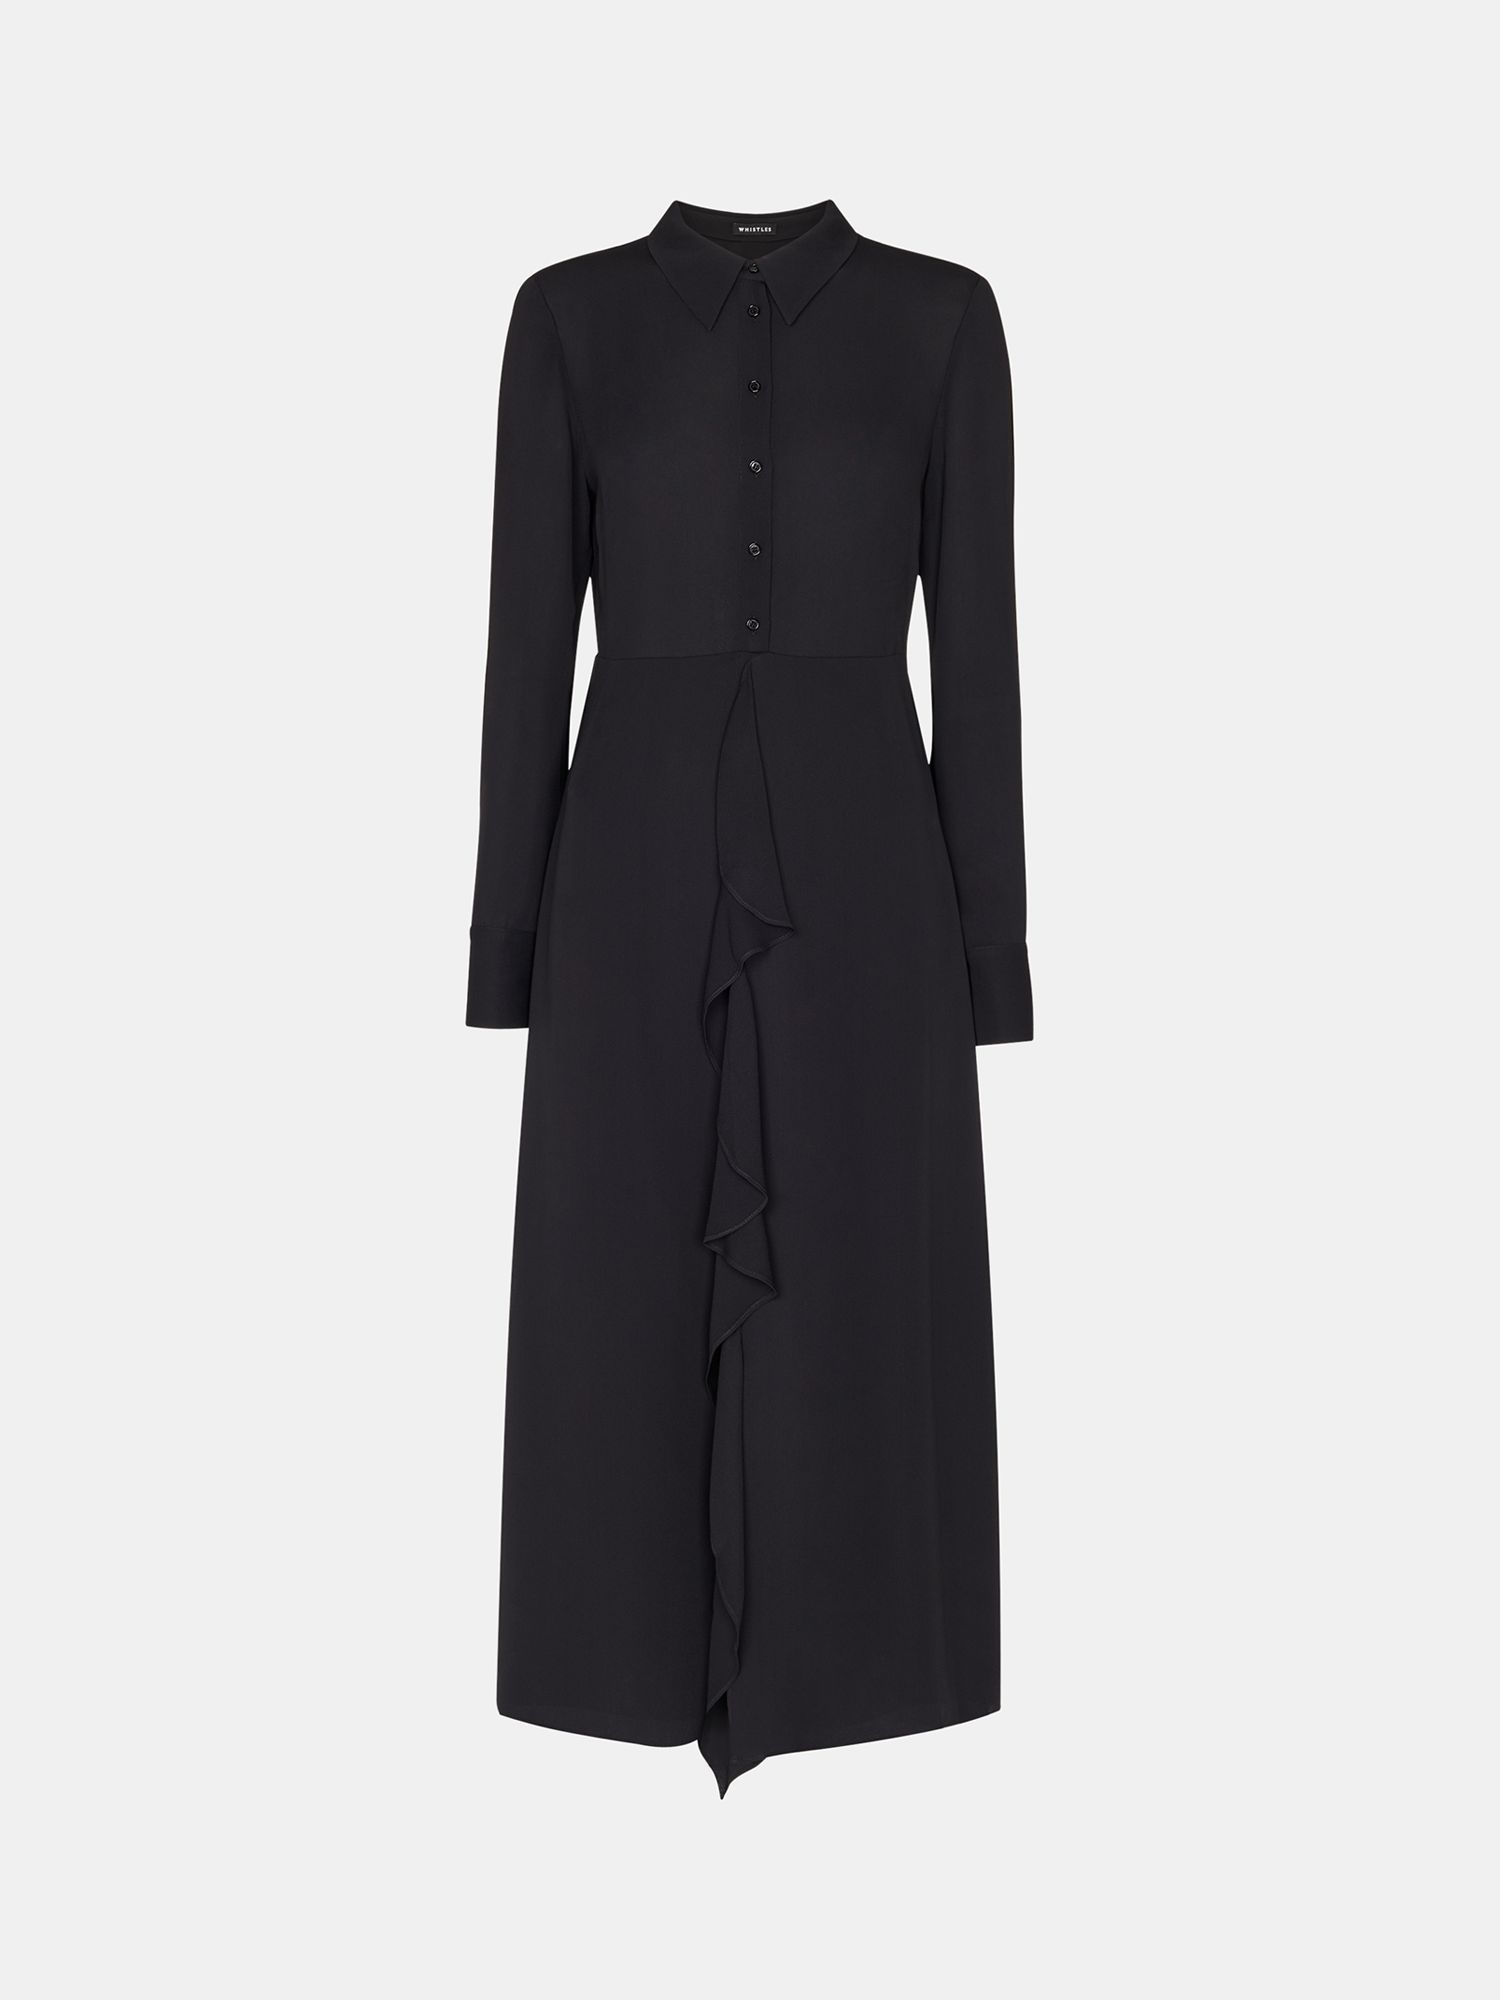 Whistles Lea Ruffle Front Midi Shirt Dress, Black at John Lewis & Partners